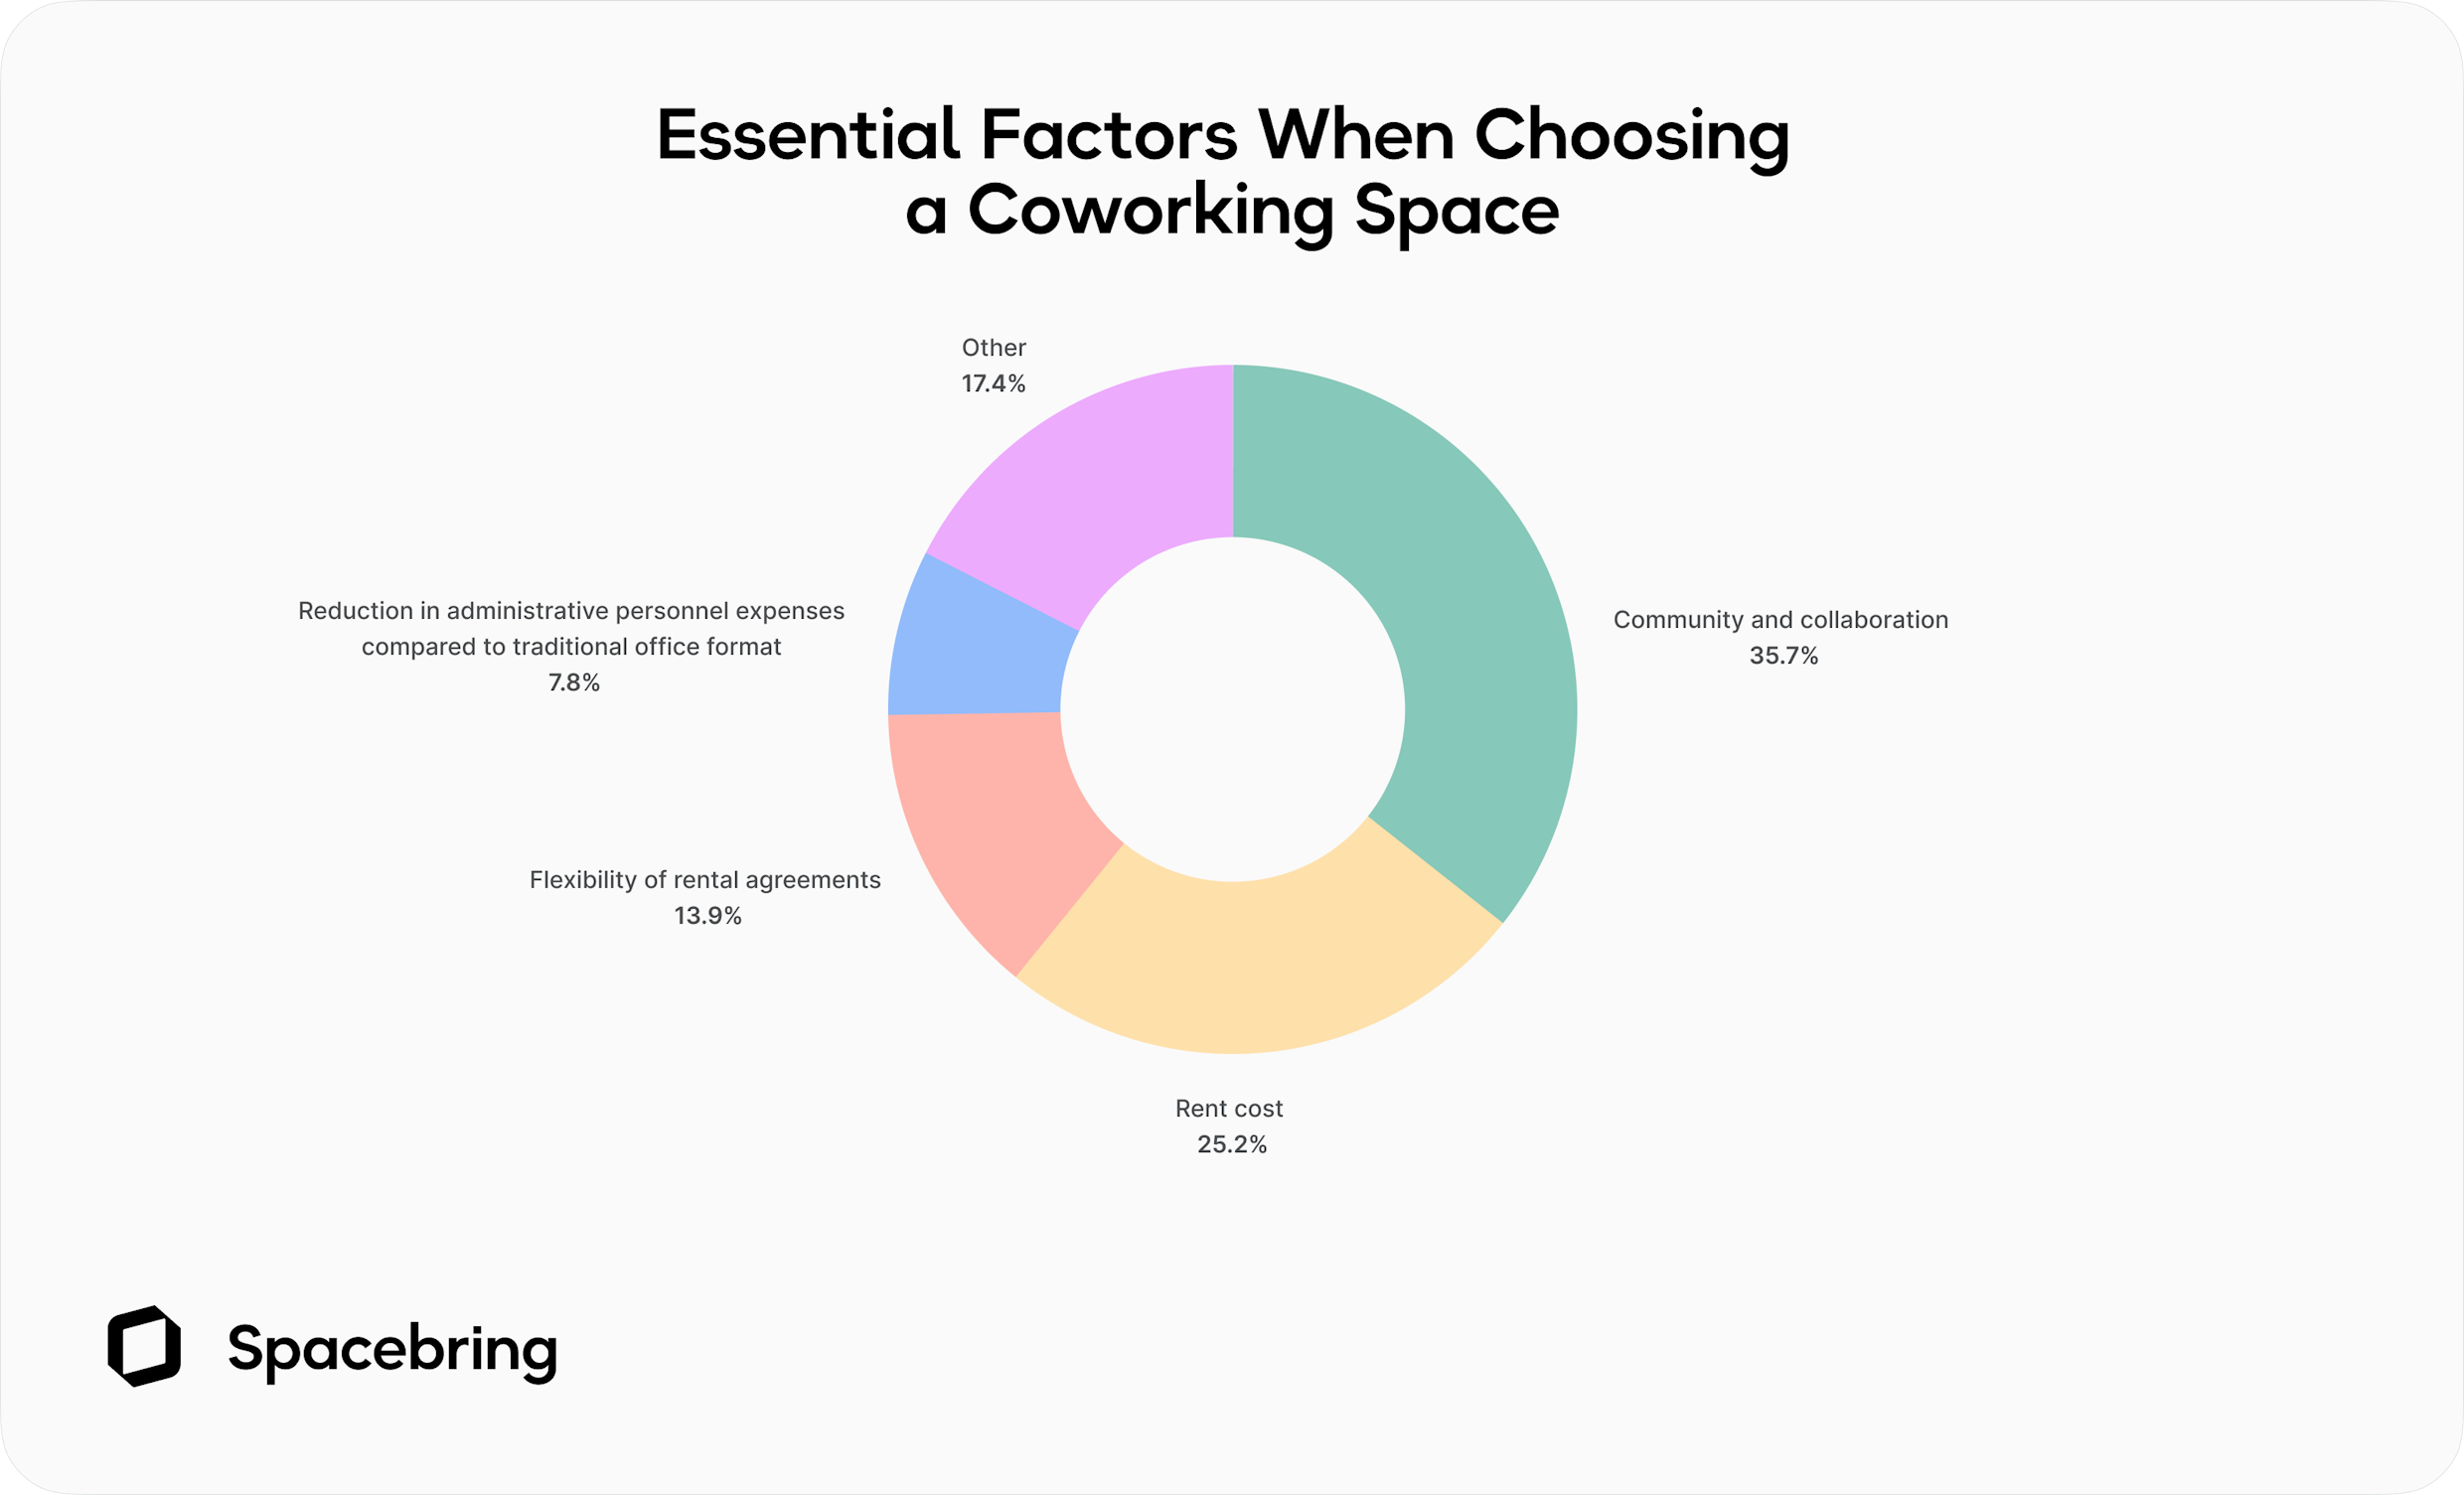 Essential factors when choosing a coworking space - Spacebring survey